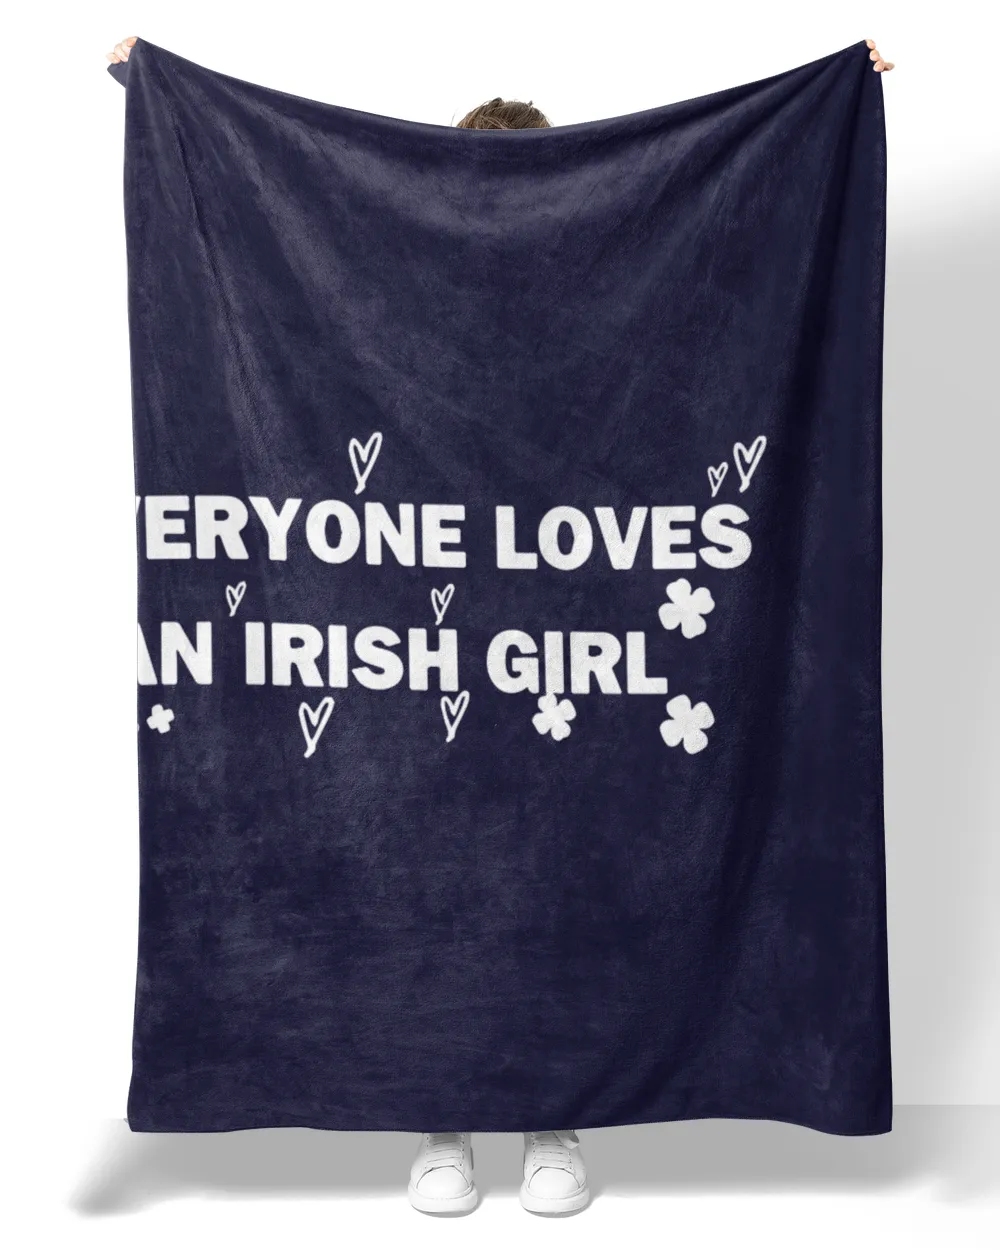 Everyone Loves an Irish Girl St. Patricks Days